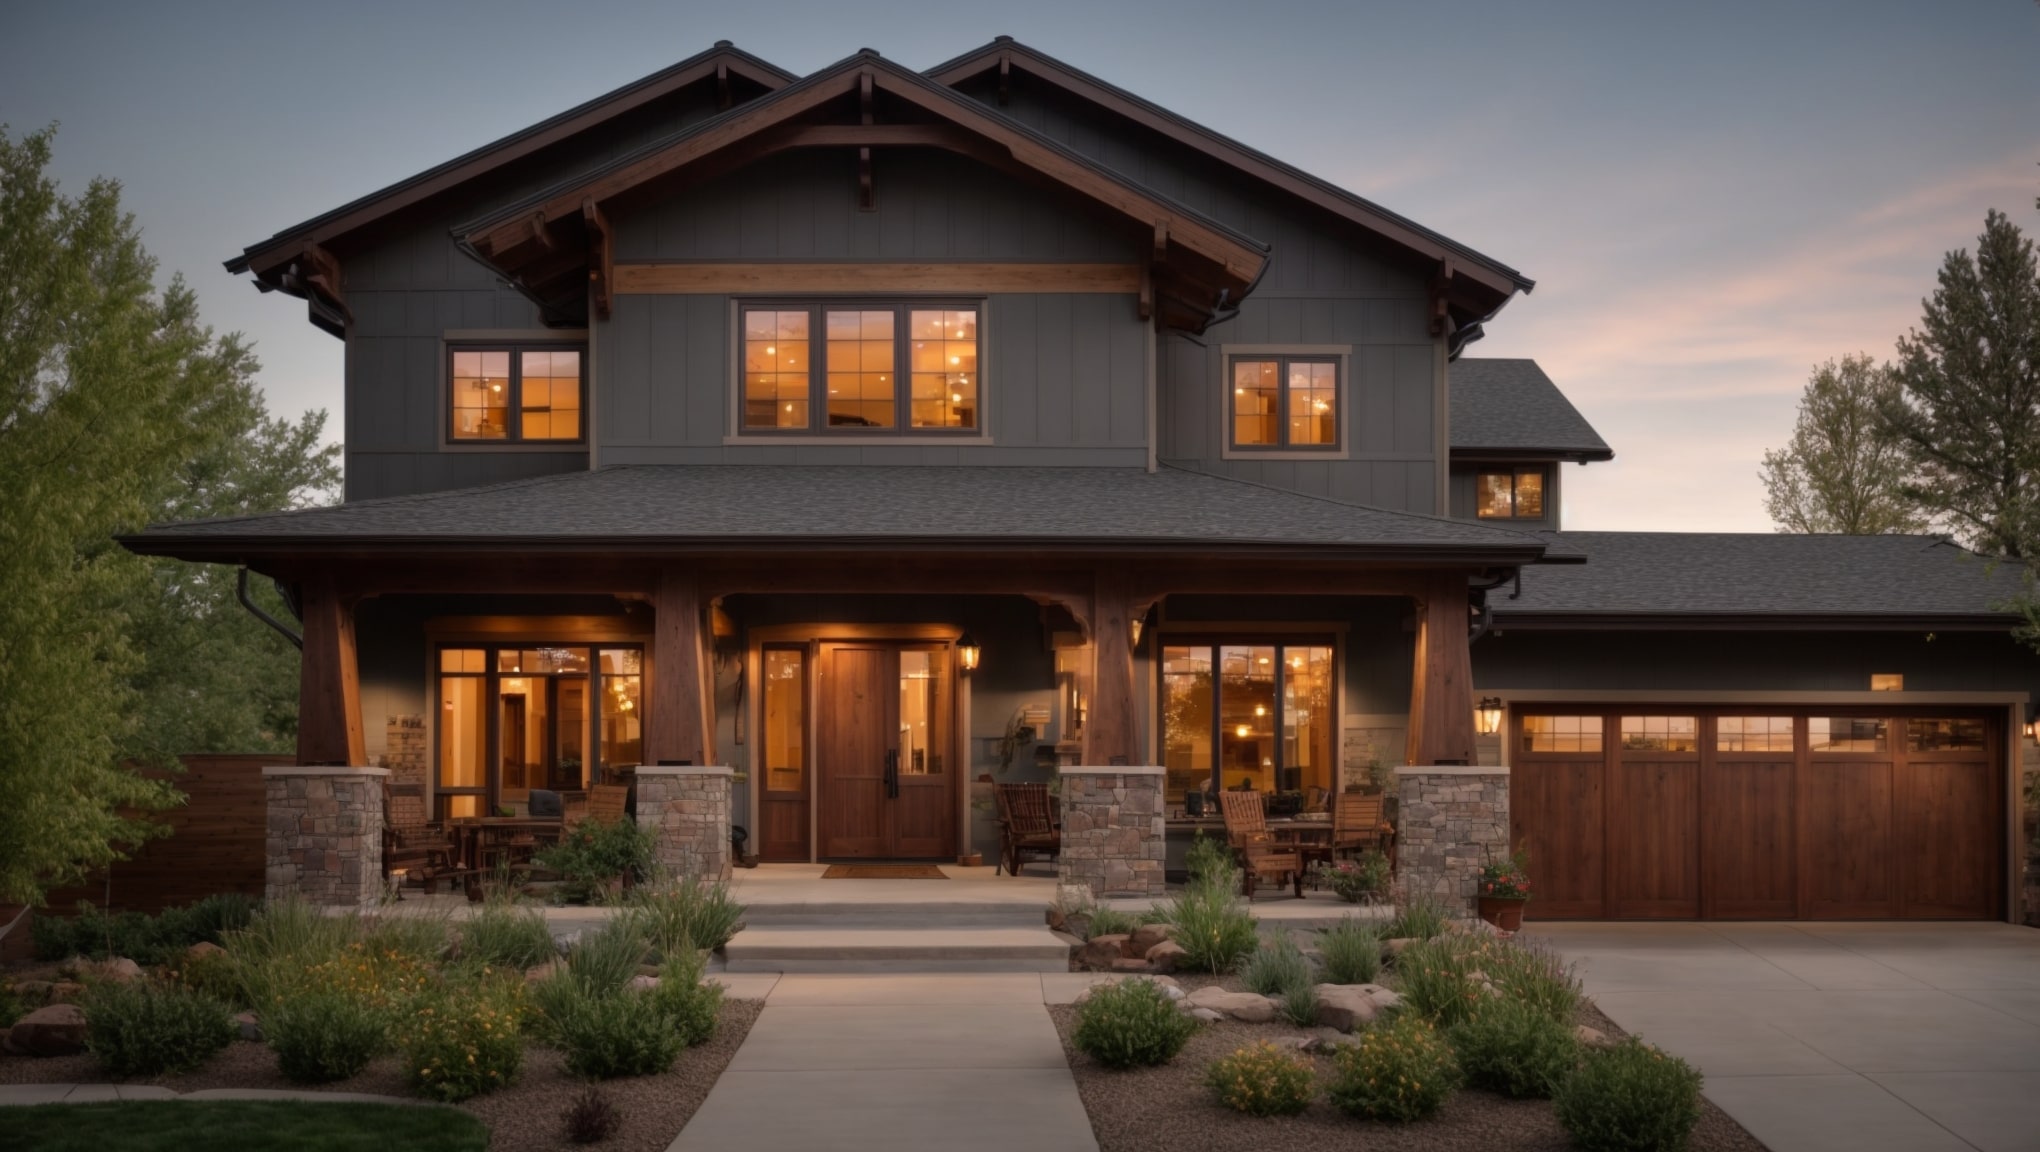 Cedar siding choice for Loveland homes with efficient craftsmanship